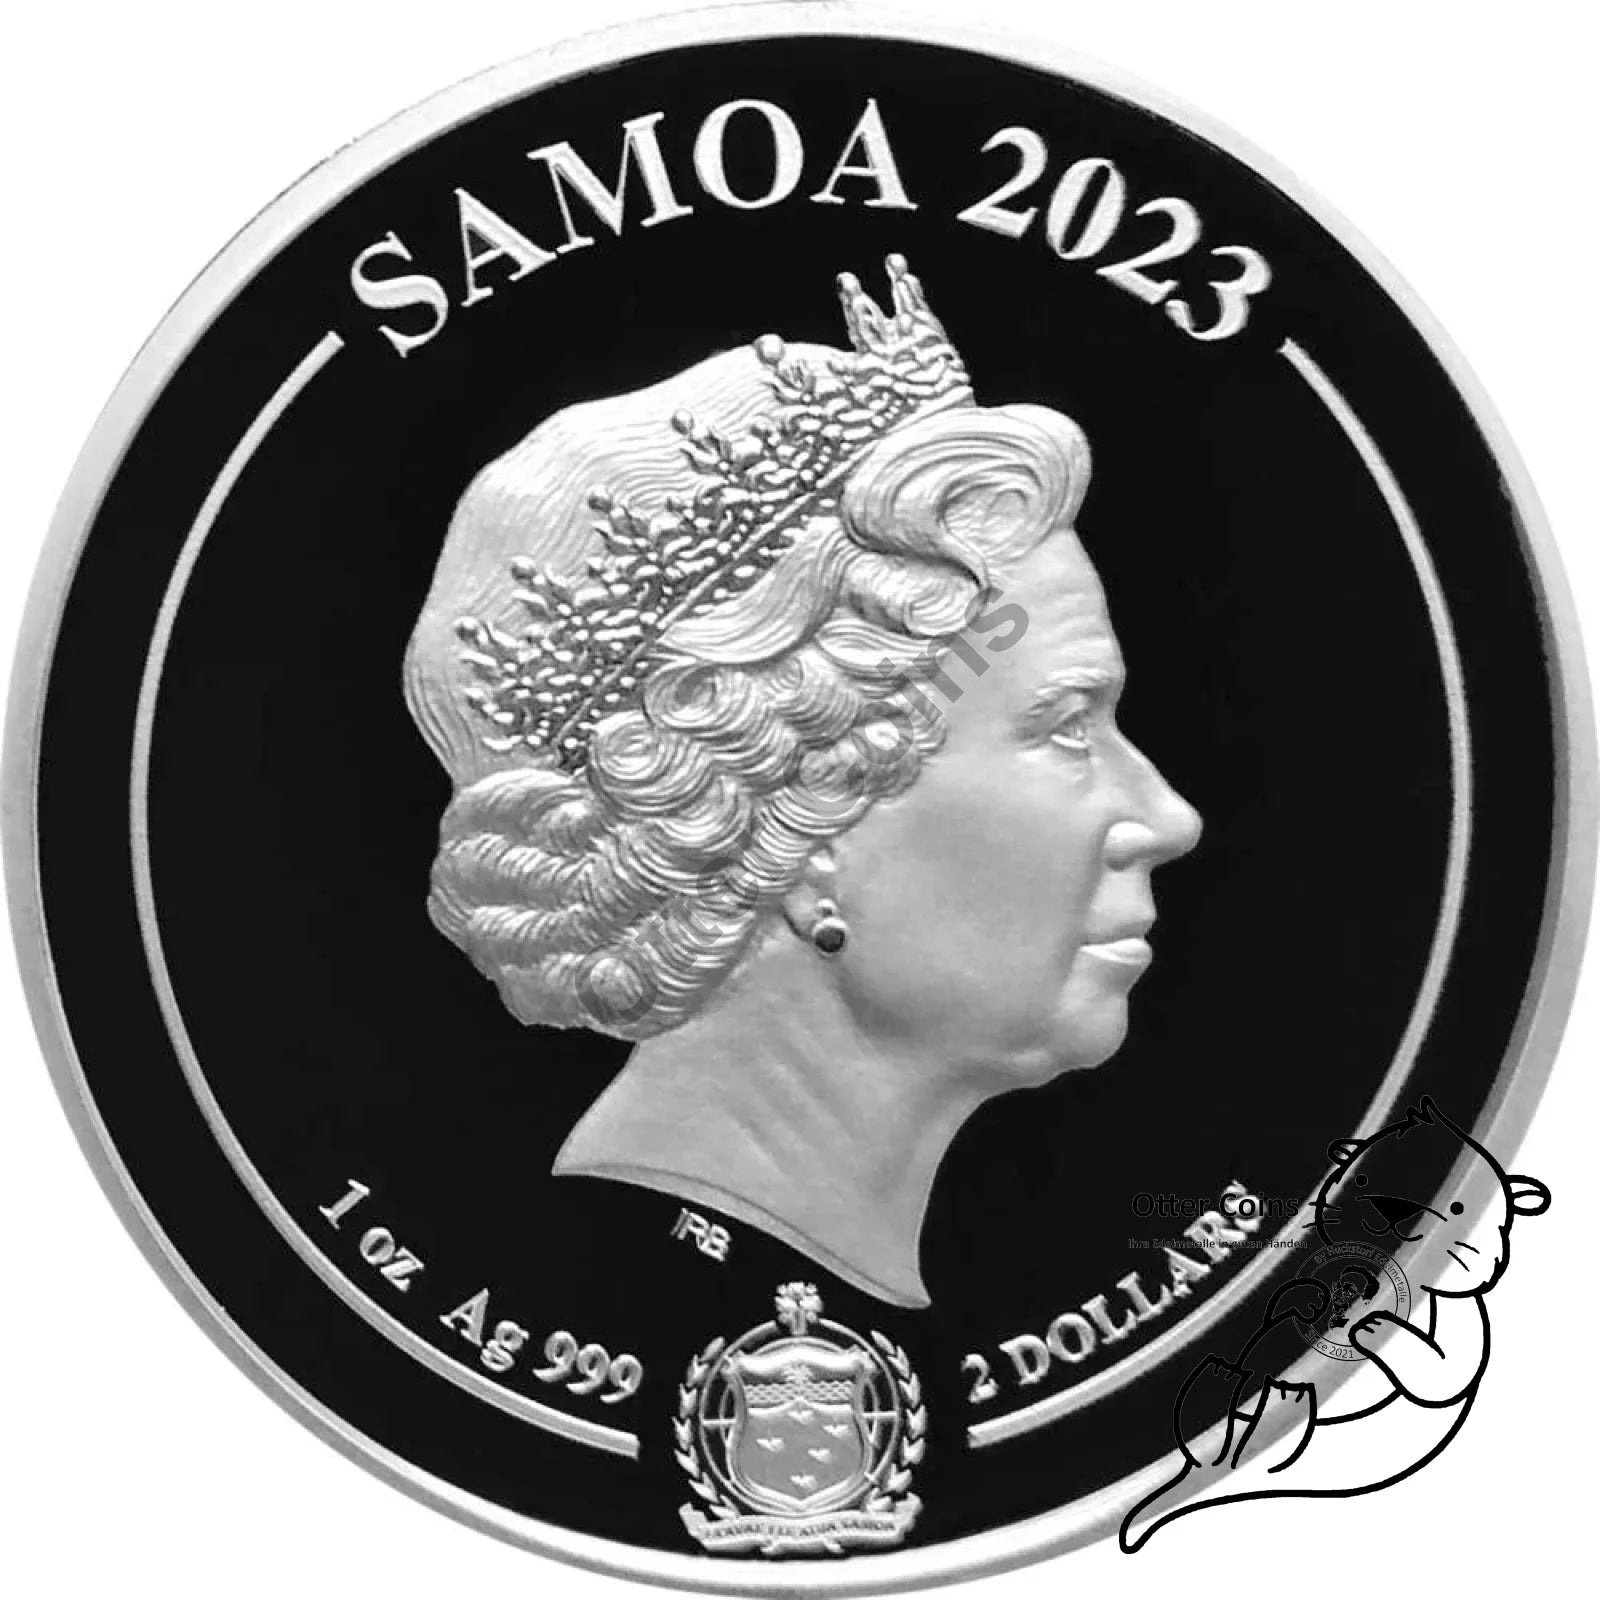 Samoa Golden Eagle 1. Ausgabe 2023 1 oz Silbermünze